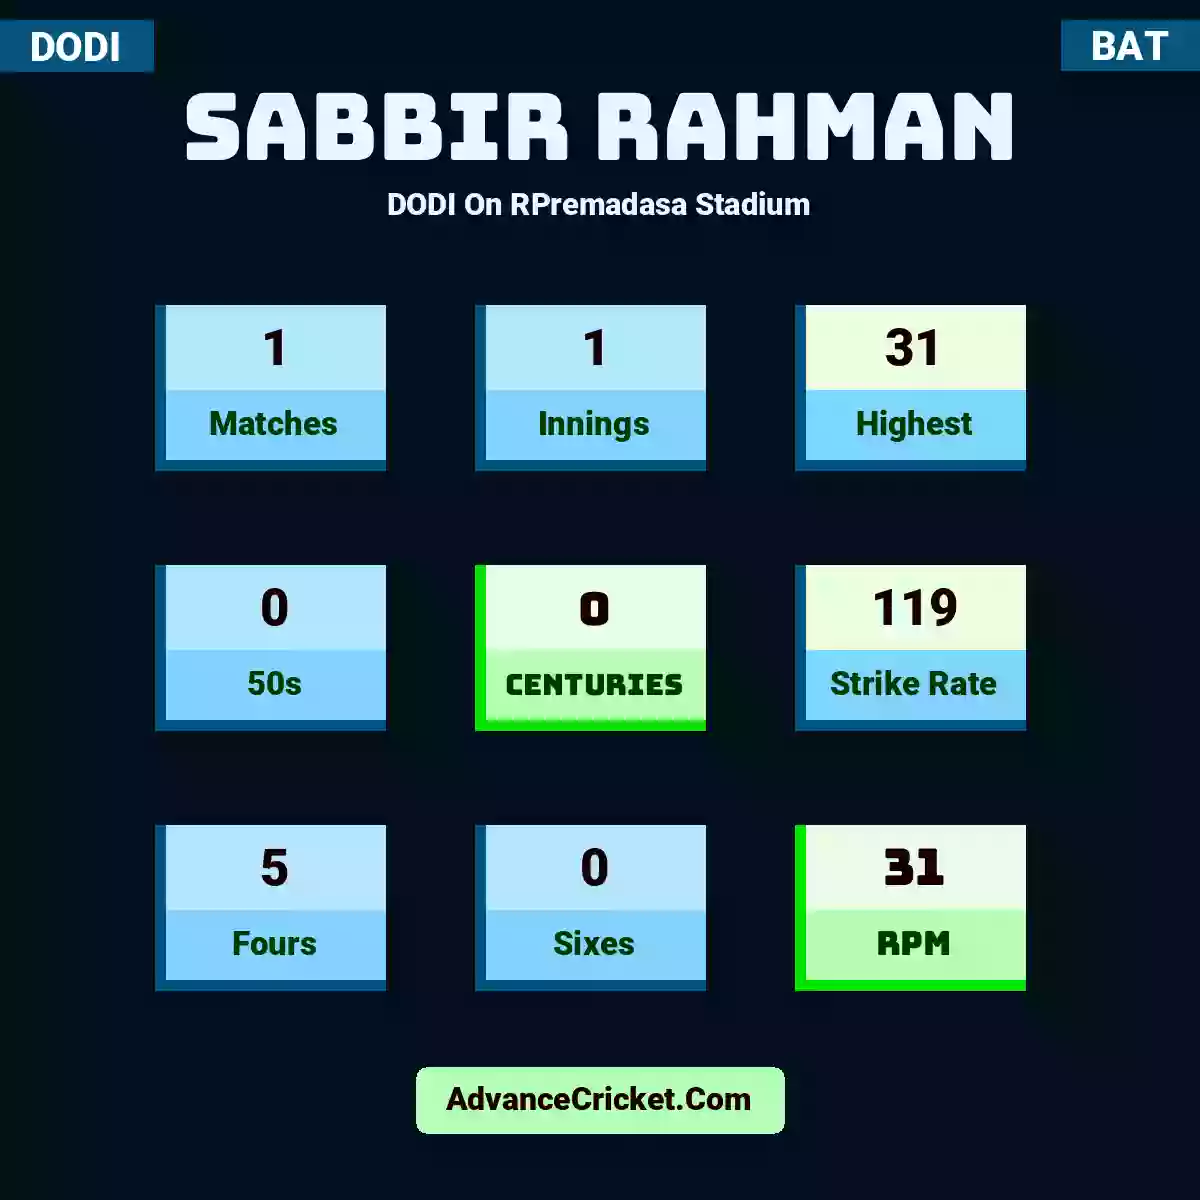 Sabbir Rahman DODI  On RPremadasa Stadium, Sabbir Rahman played 1 matches, scored 31 runs as highest, 0 half-centuries, and 0 centuries, with a strike rate of 119. S.Rahman hit 5 fours and 0 sixes, with an RPM of 31.